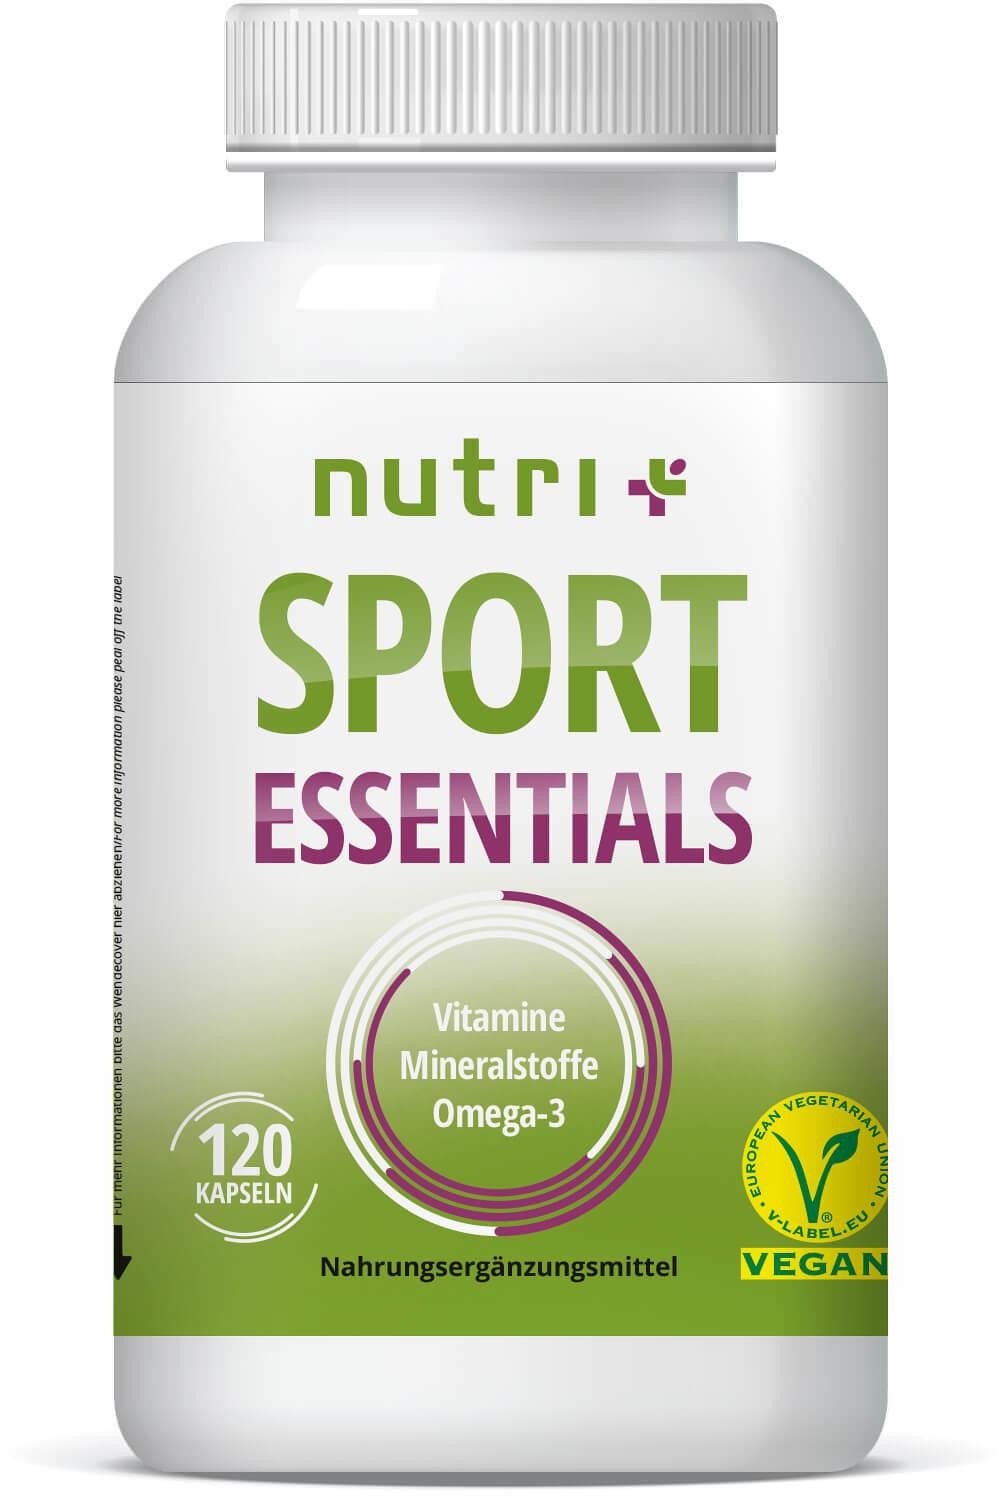 120 Kapseln Nutri-Plus Vegan Sport Essentials Multivitamin EUR 118,28/kg 